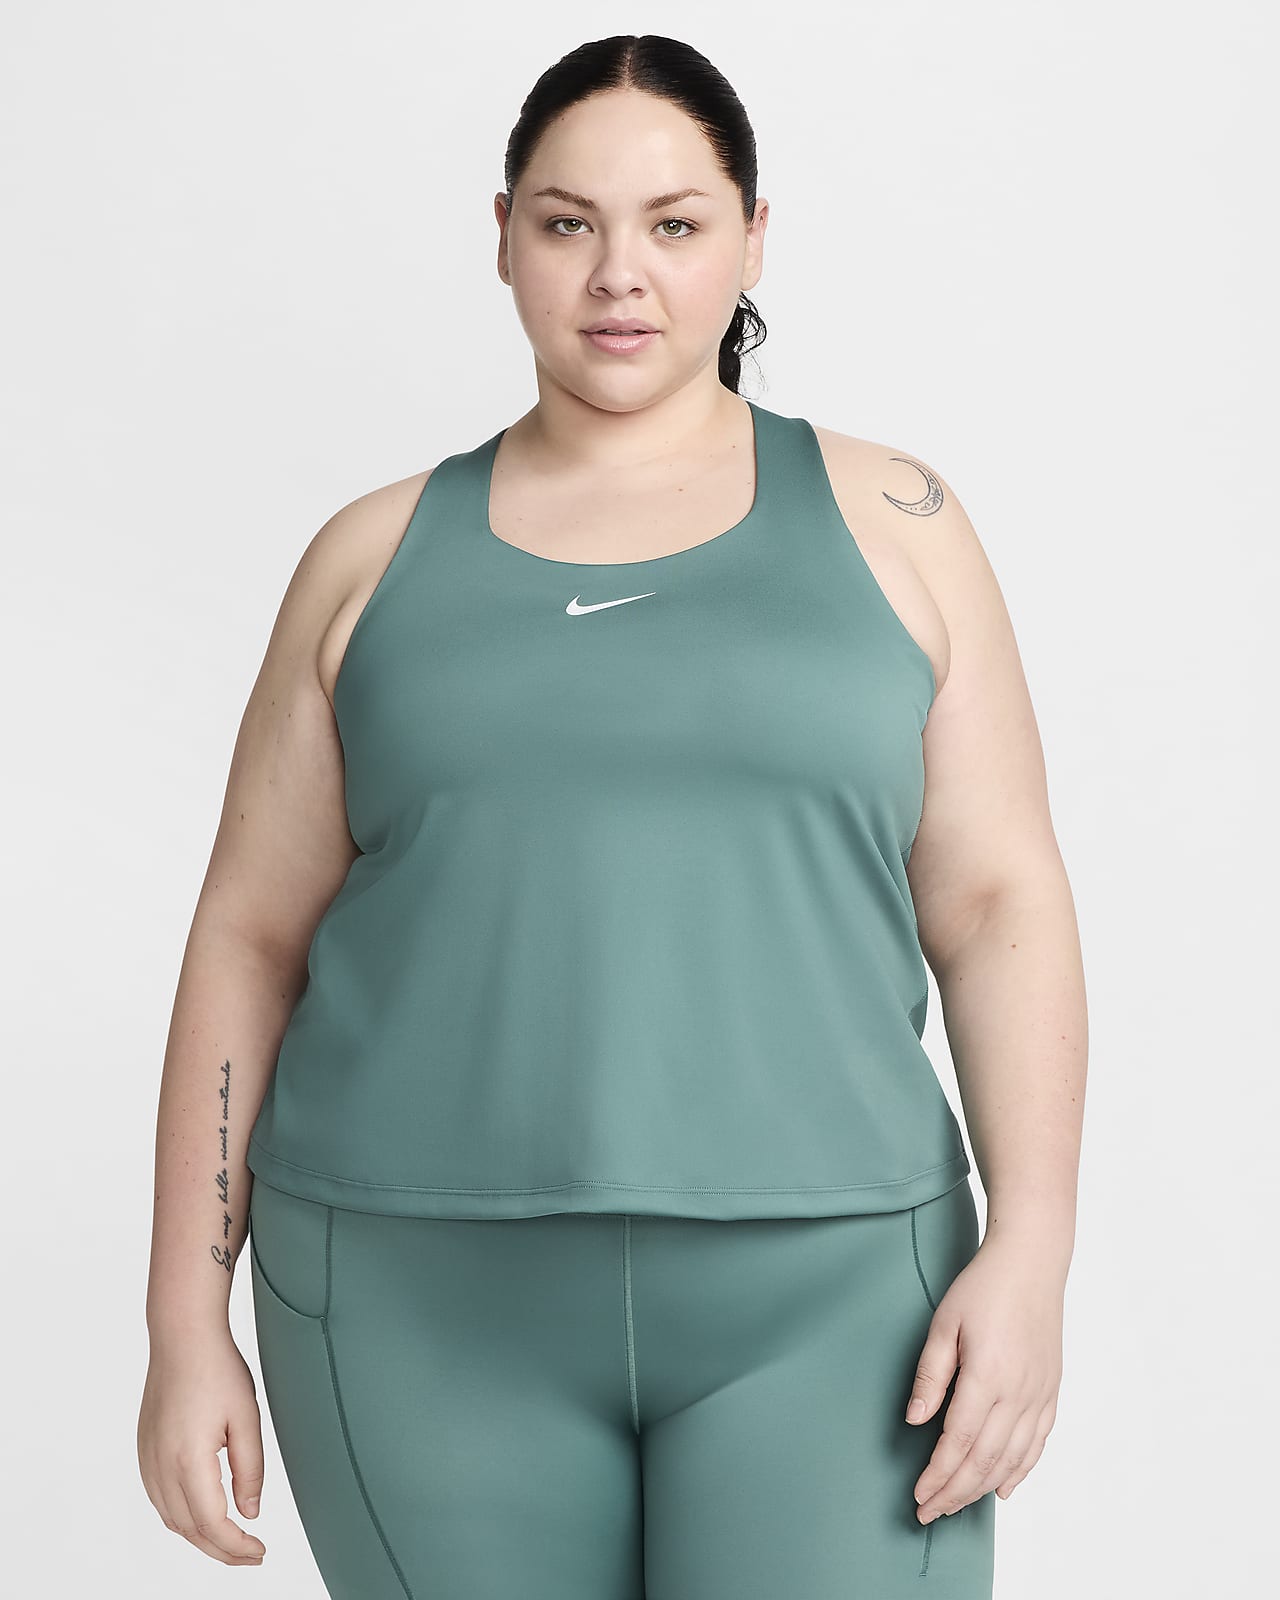 Nike - Nike singlet with built in bra on Designer Wardrobe